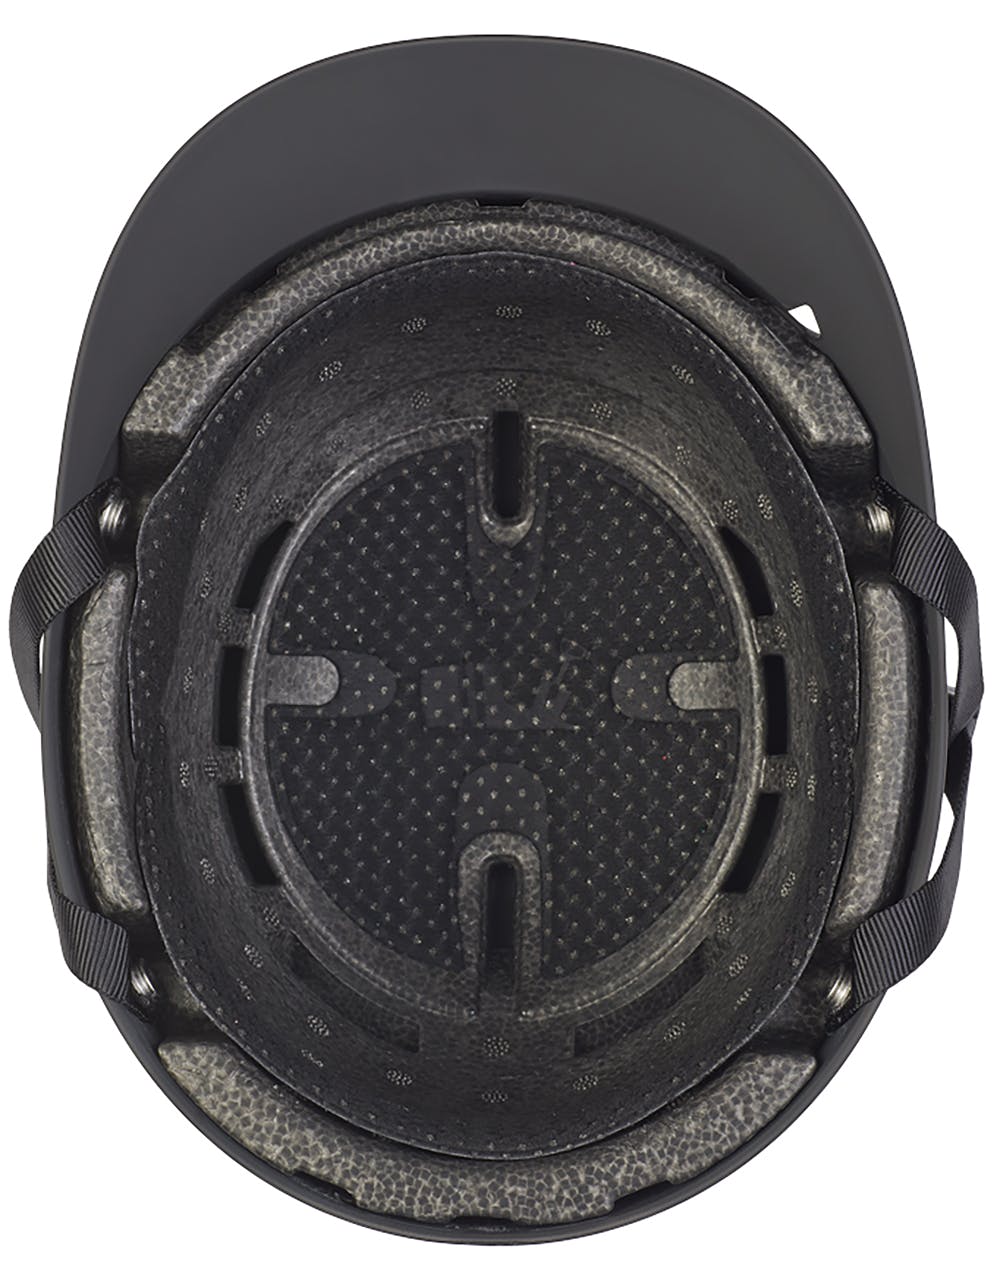 Sandbox Classic 2.0 Snowboard Helmet - Spaced Out